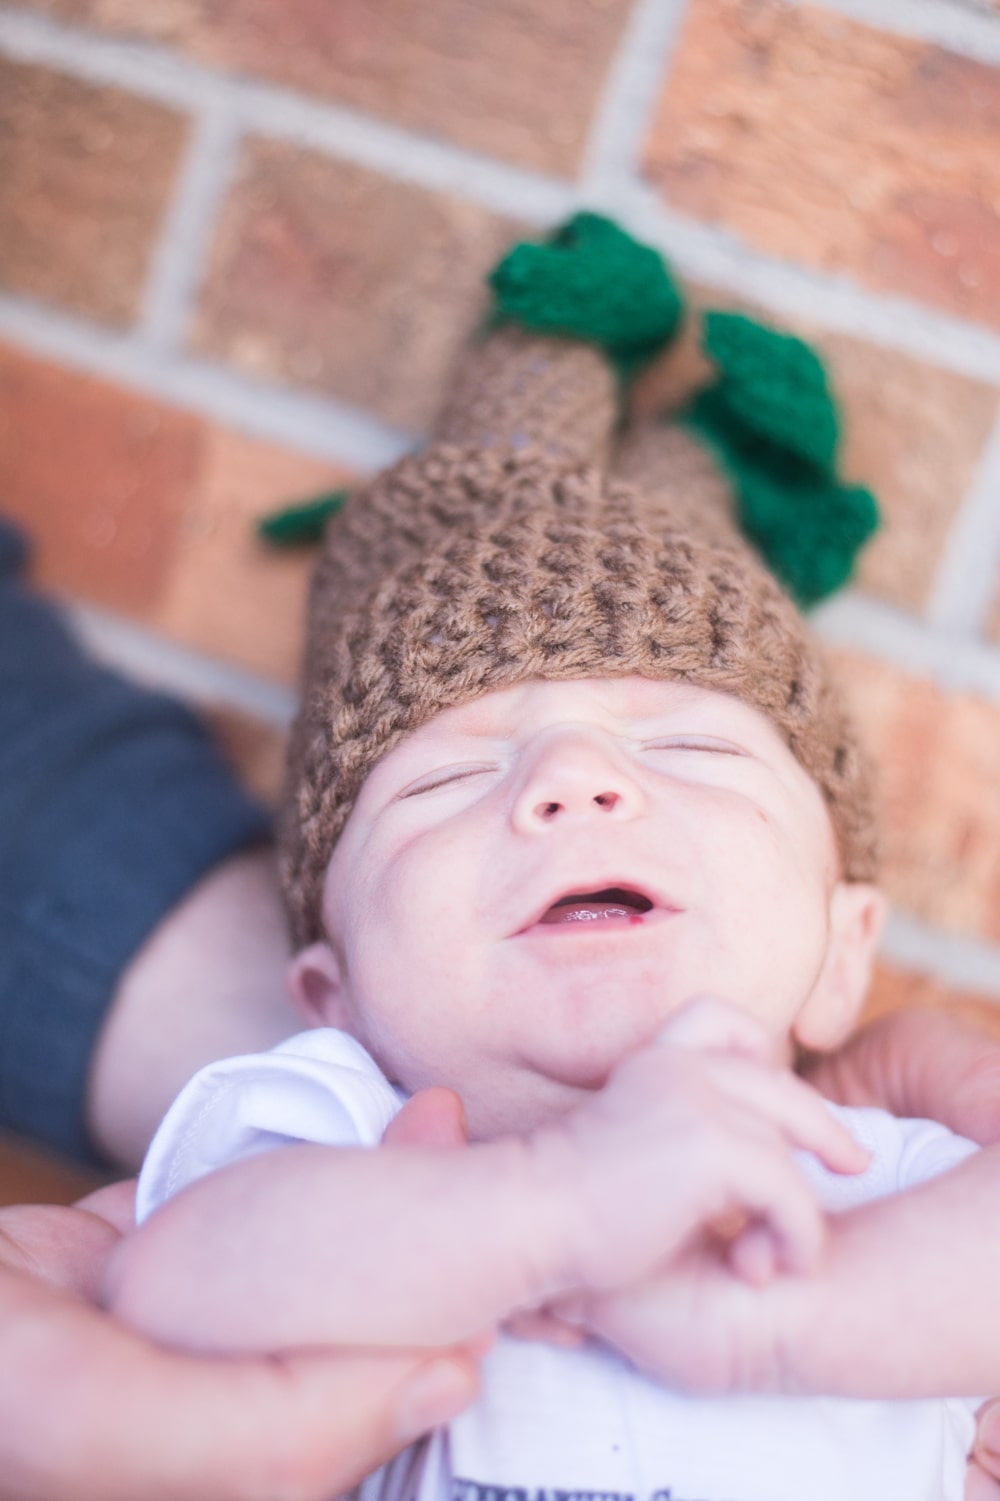 A baby wearing a cute cap